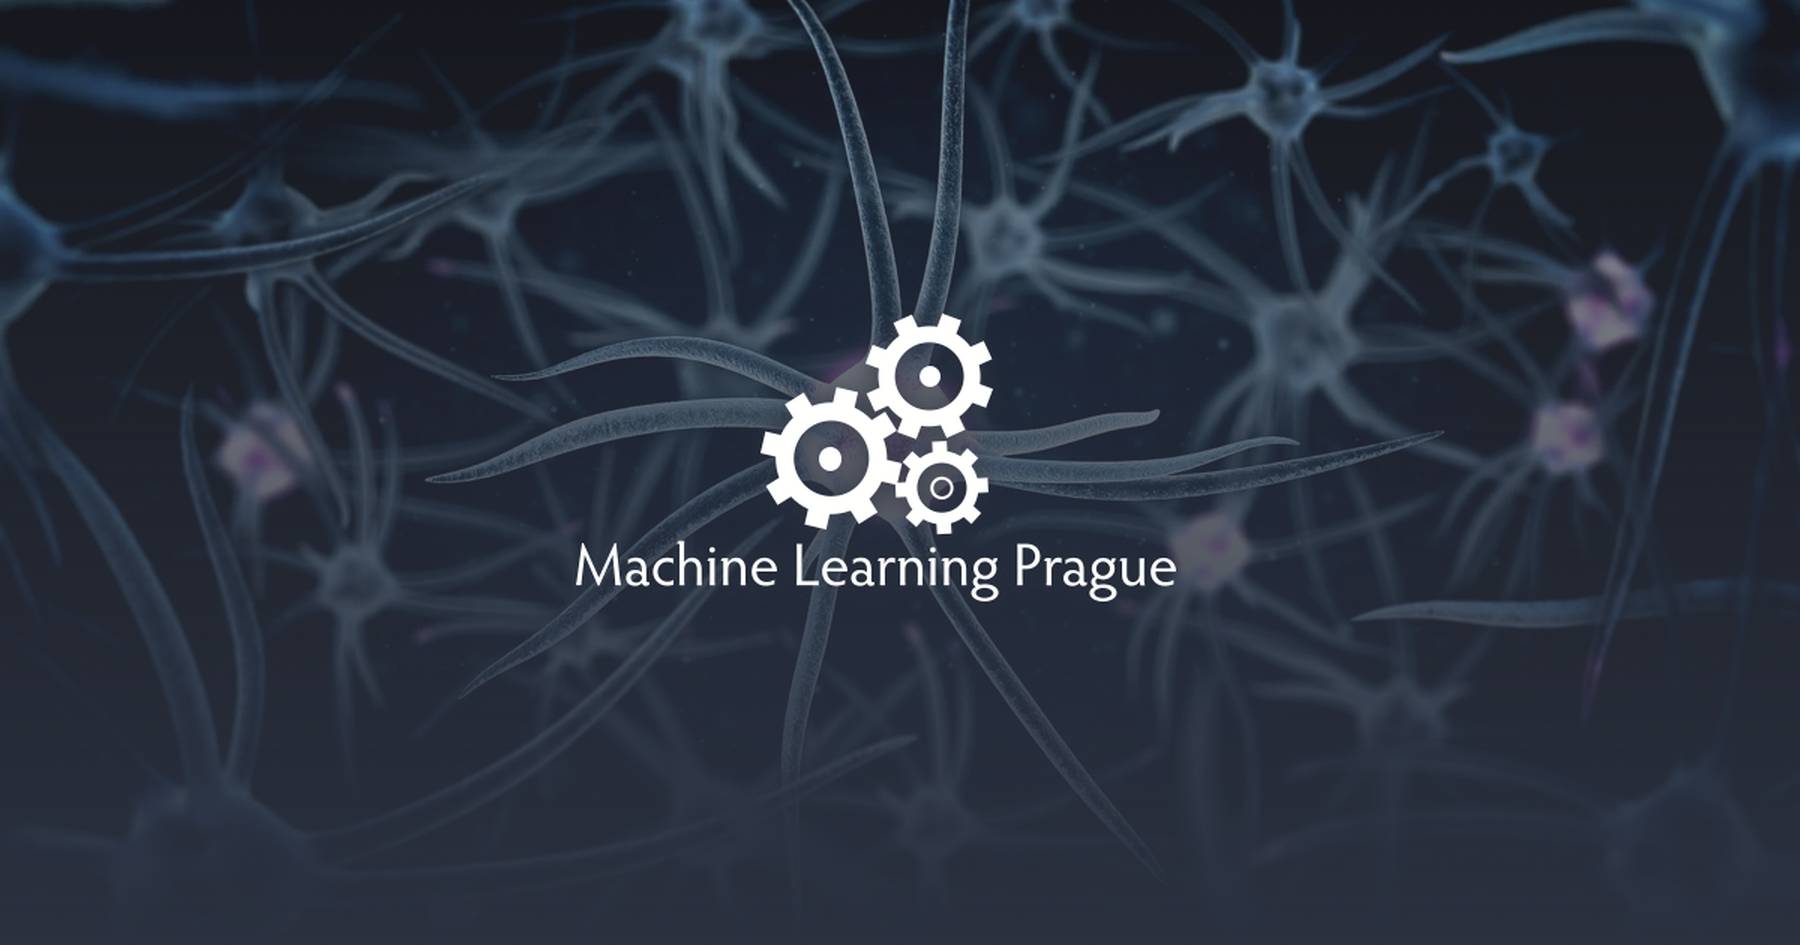 Machine Learning Prague 2024